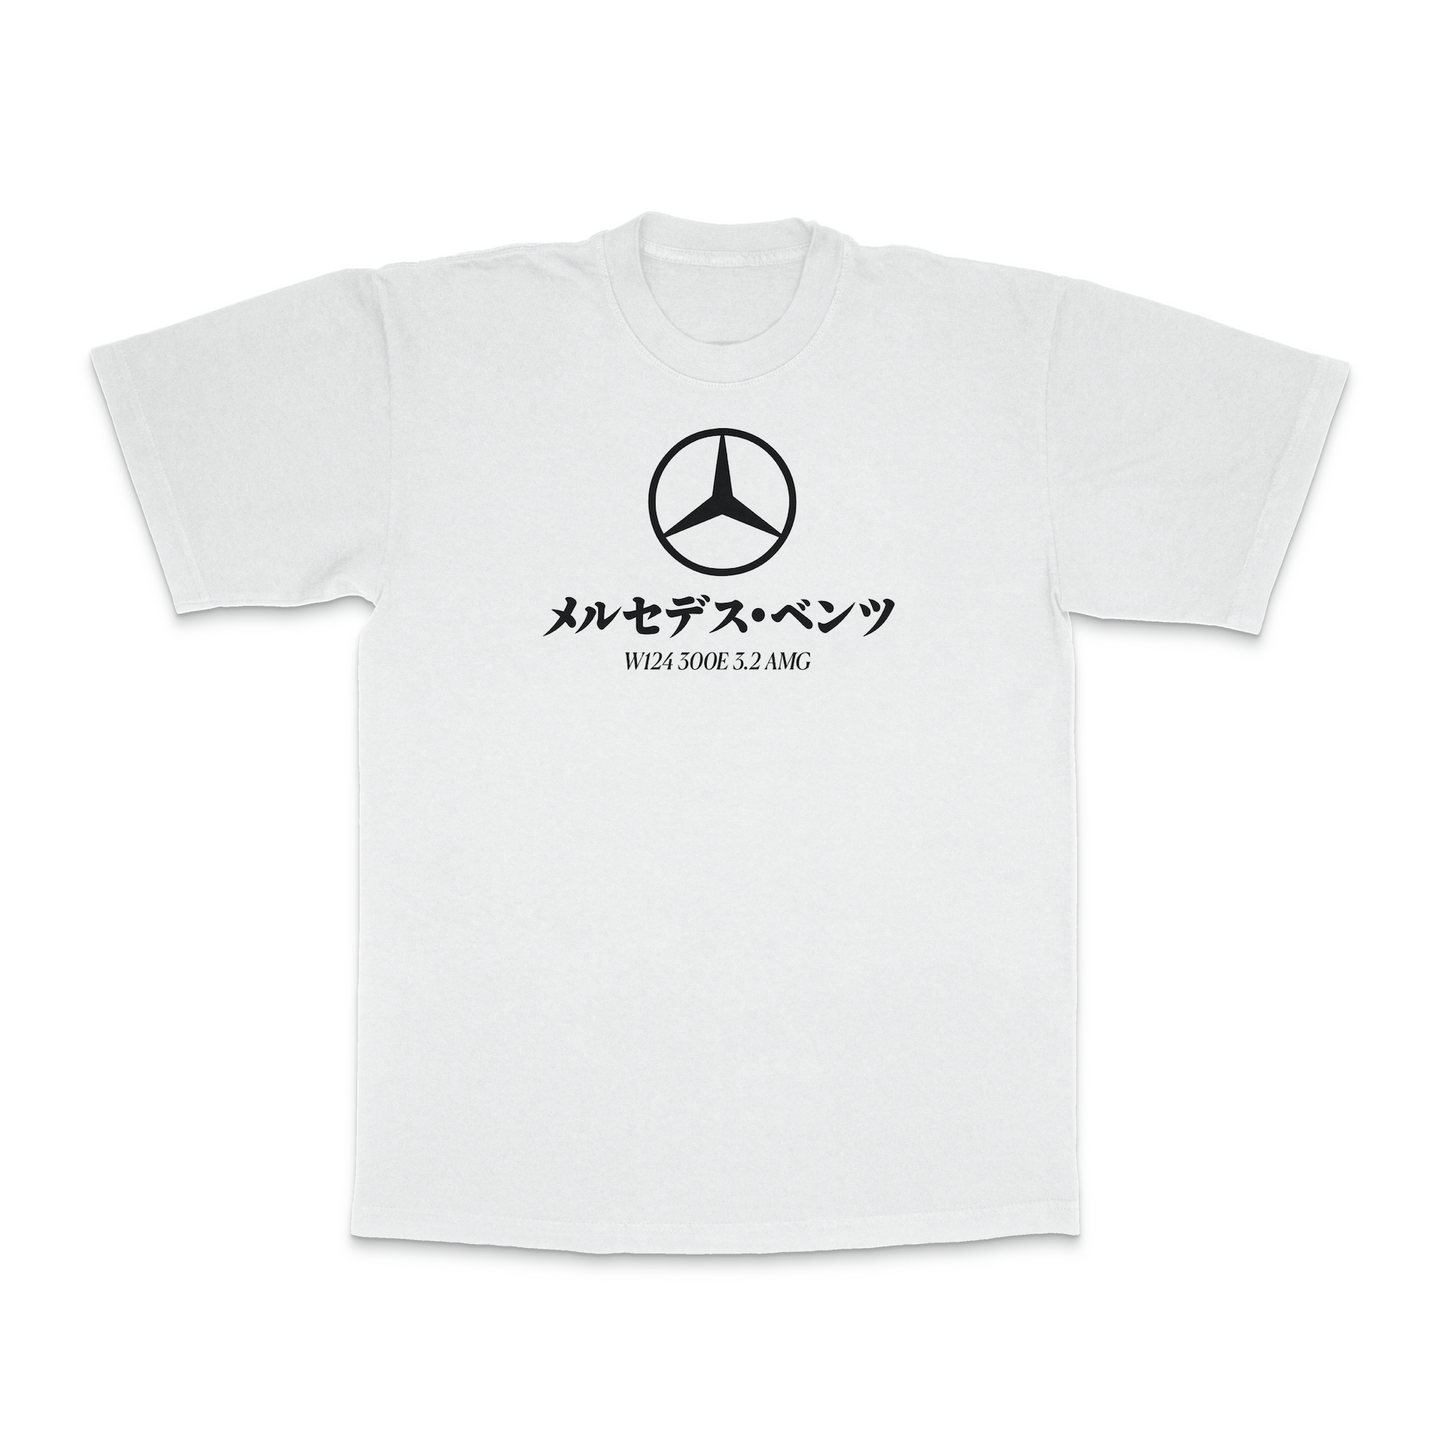 Mercedes Benz 300E AMG Ad T-Shirt - White